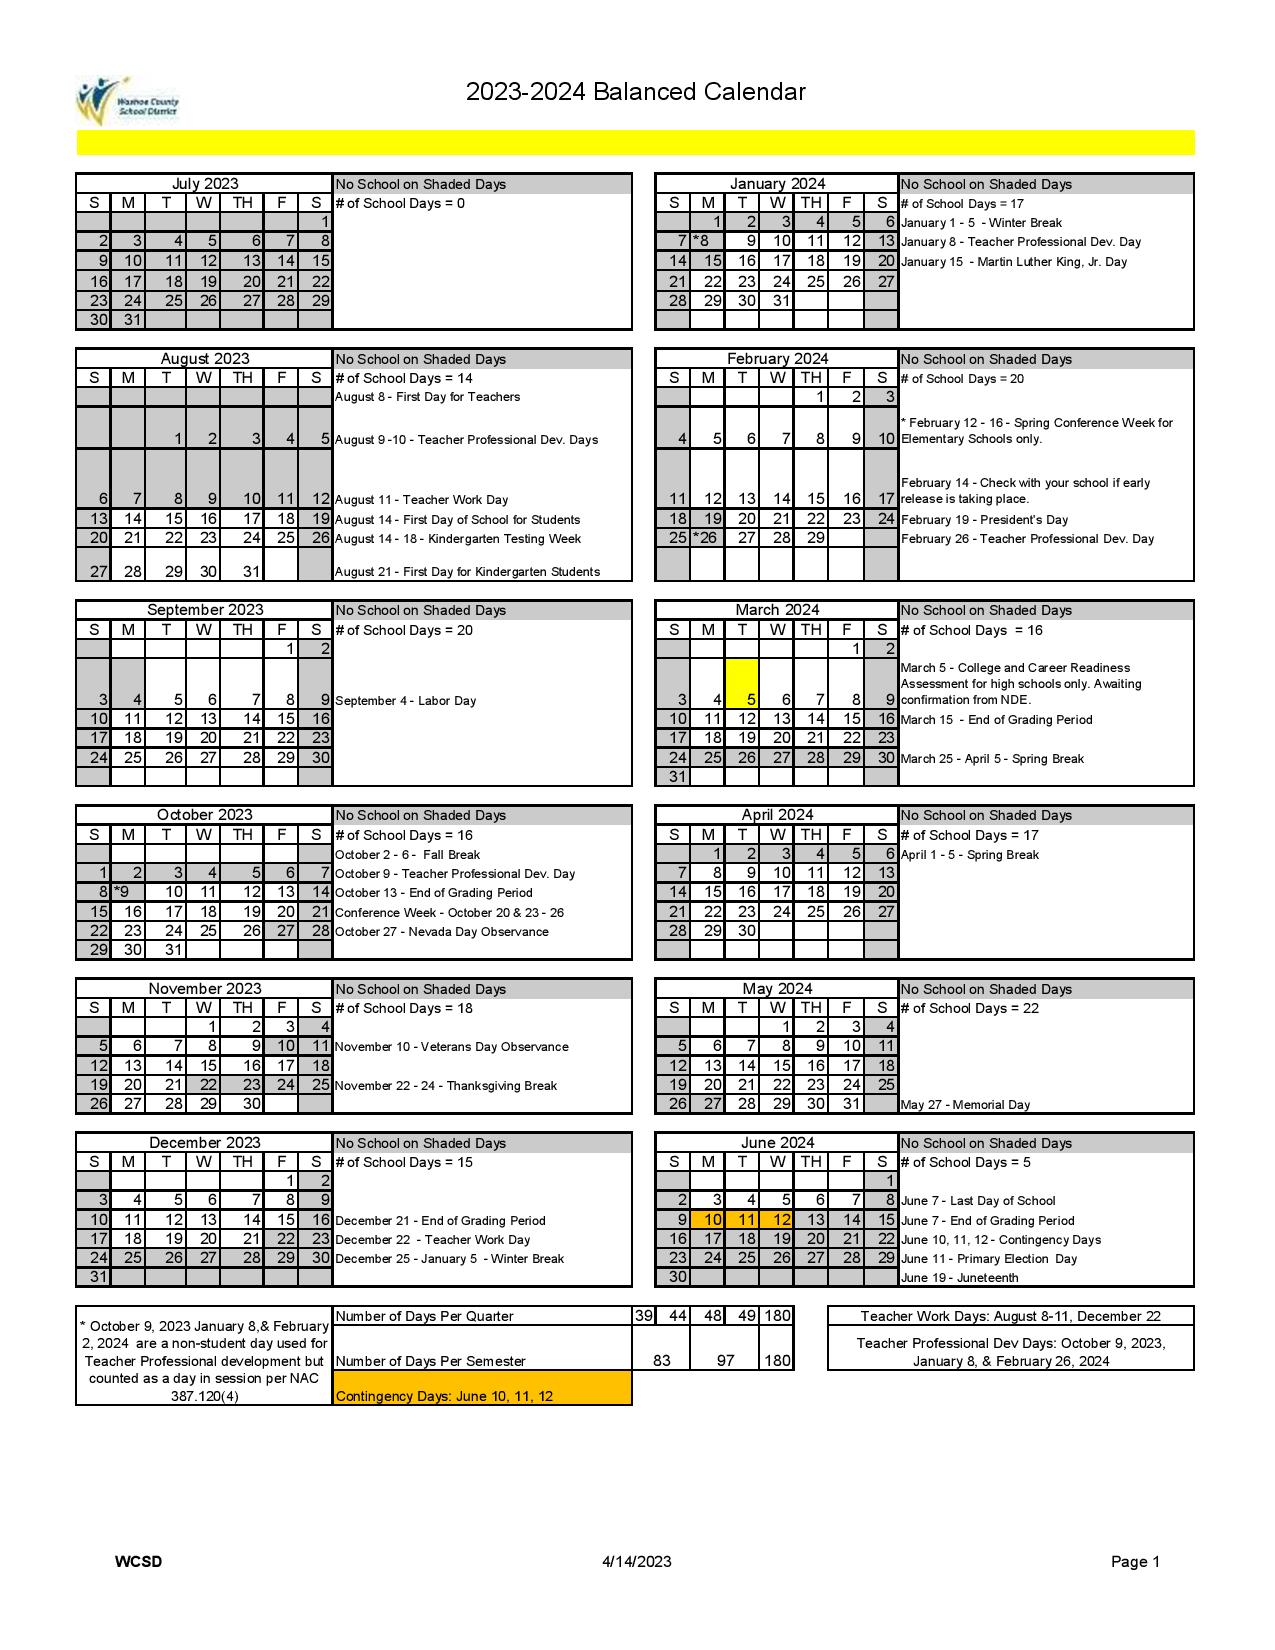 Washoe County School District Calendar 2024 2025 in PDF